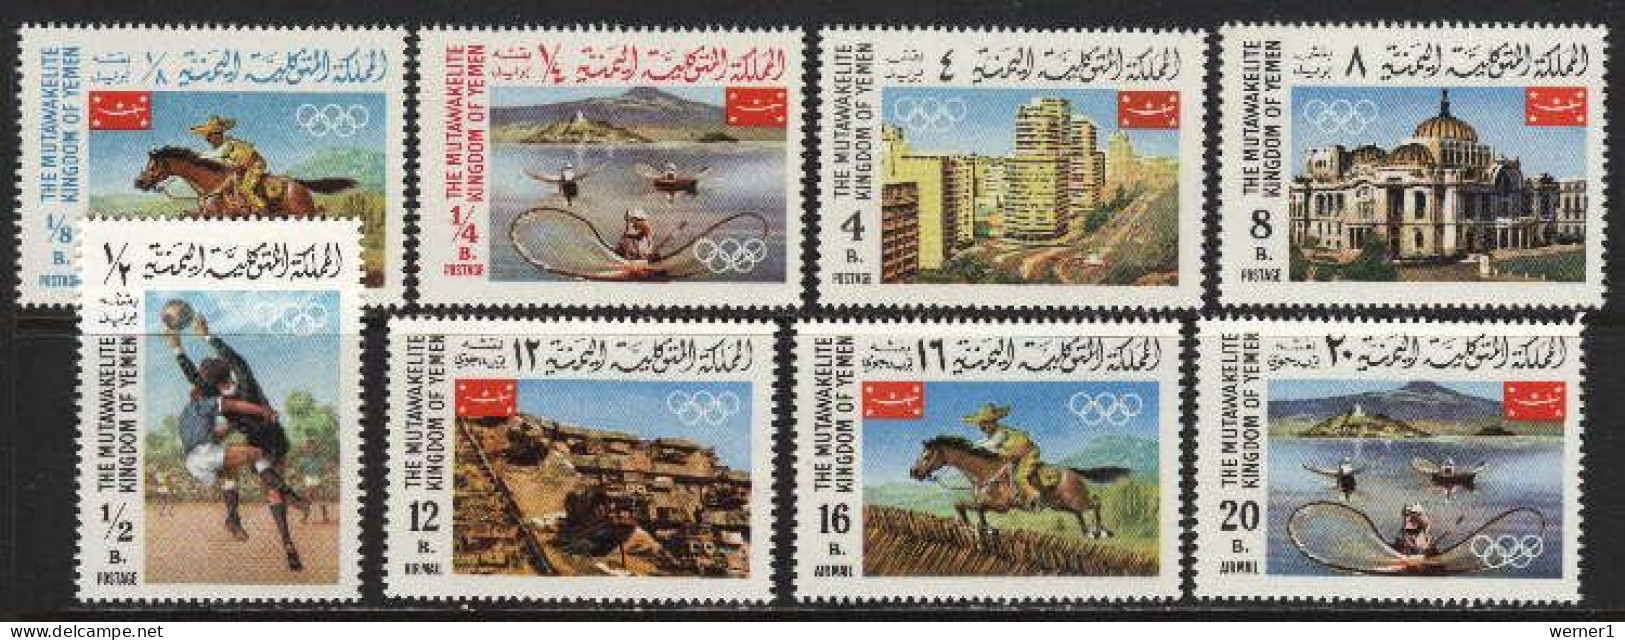 Yemen Kingdom 1967 Olympic Games Mexico Set Of 8 MNH - Ete 1968: Mexico